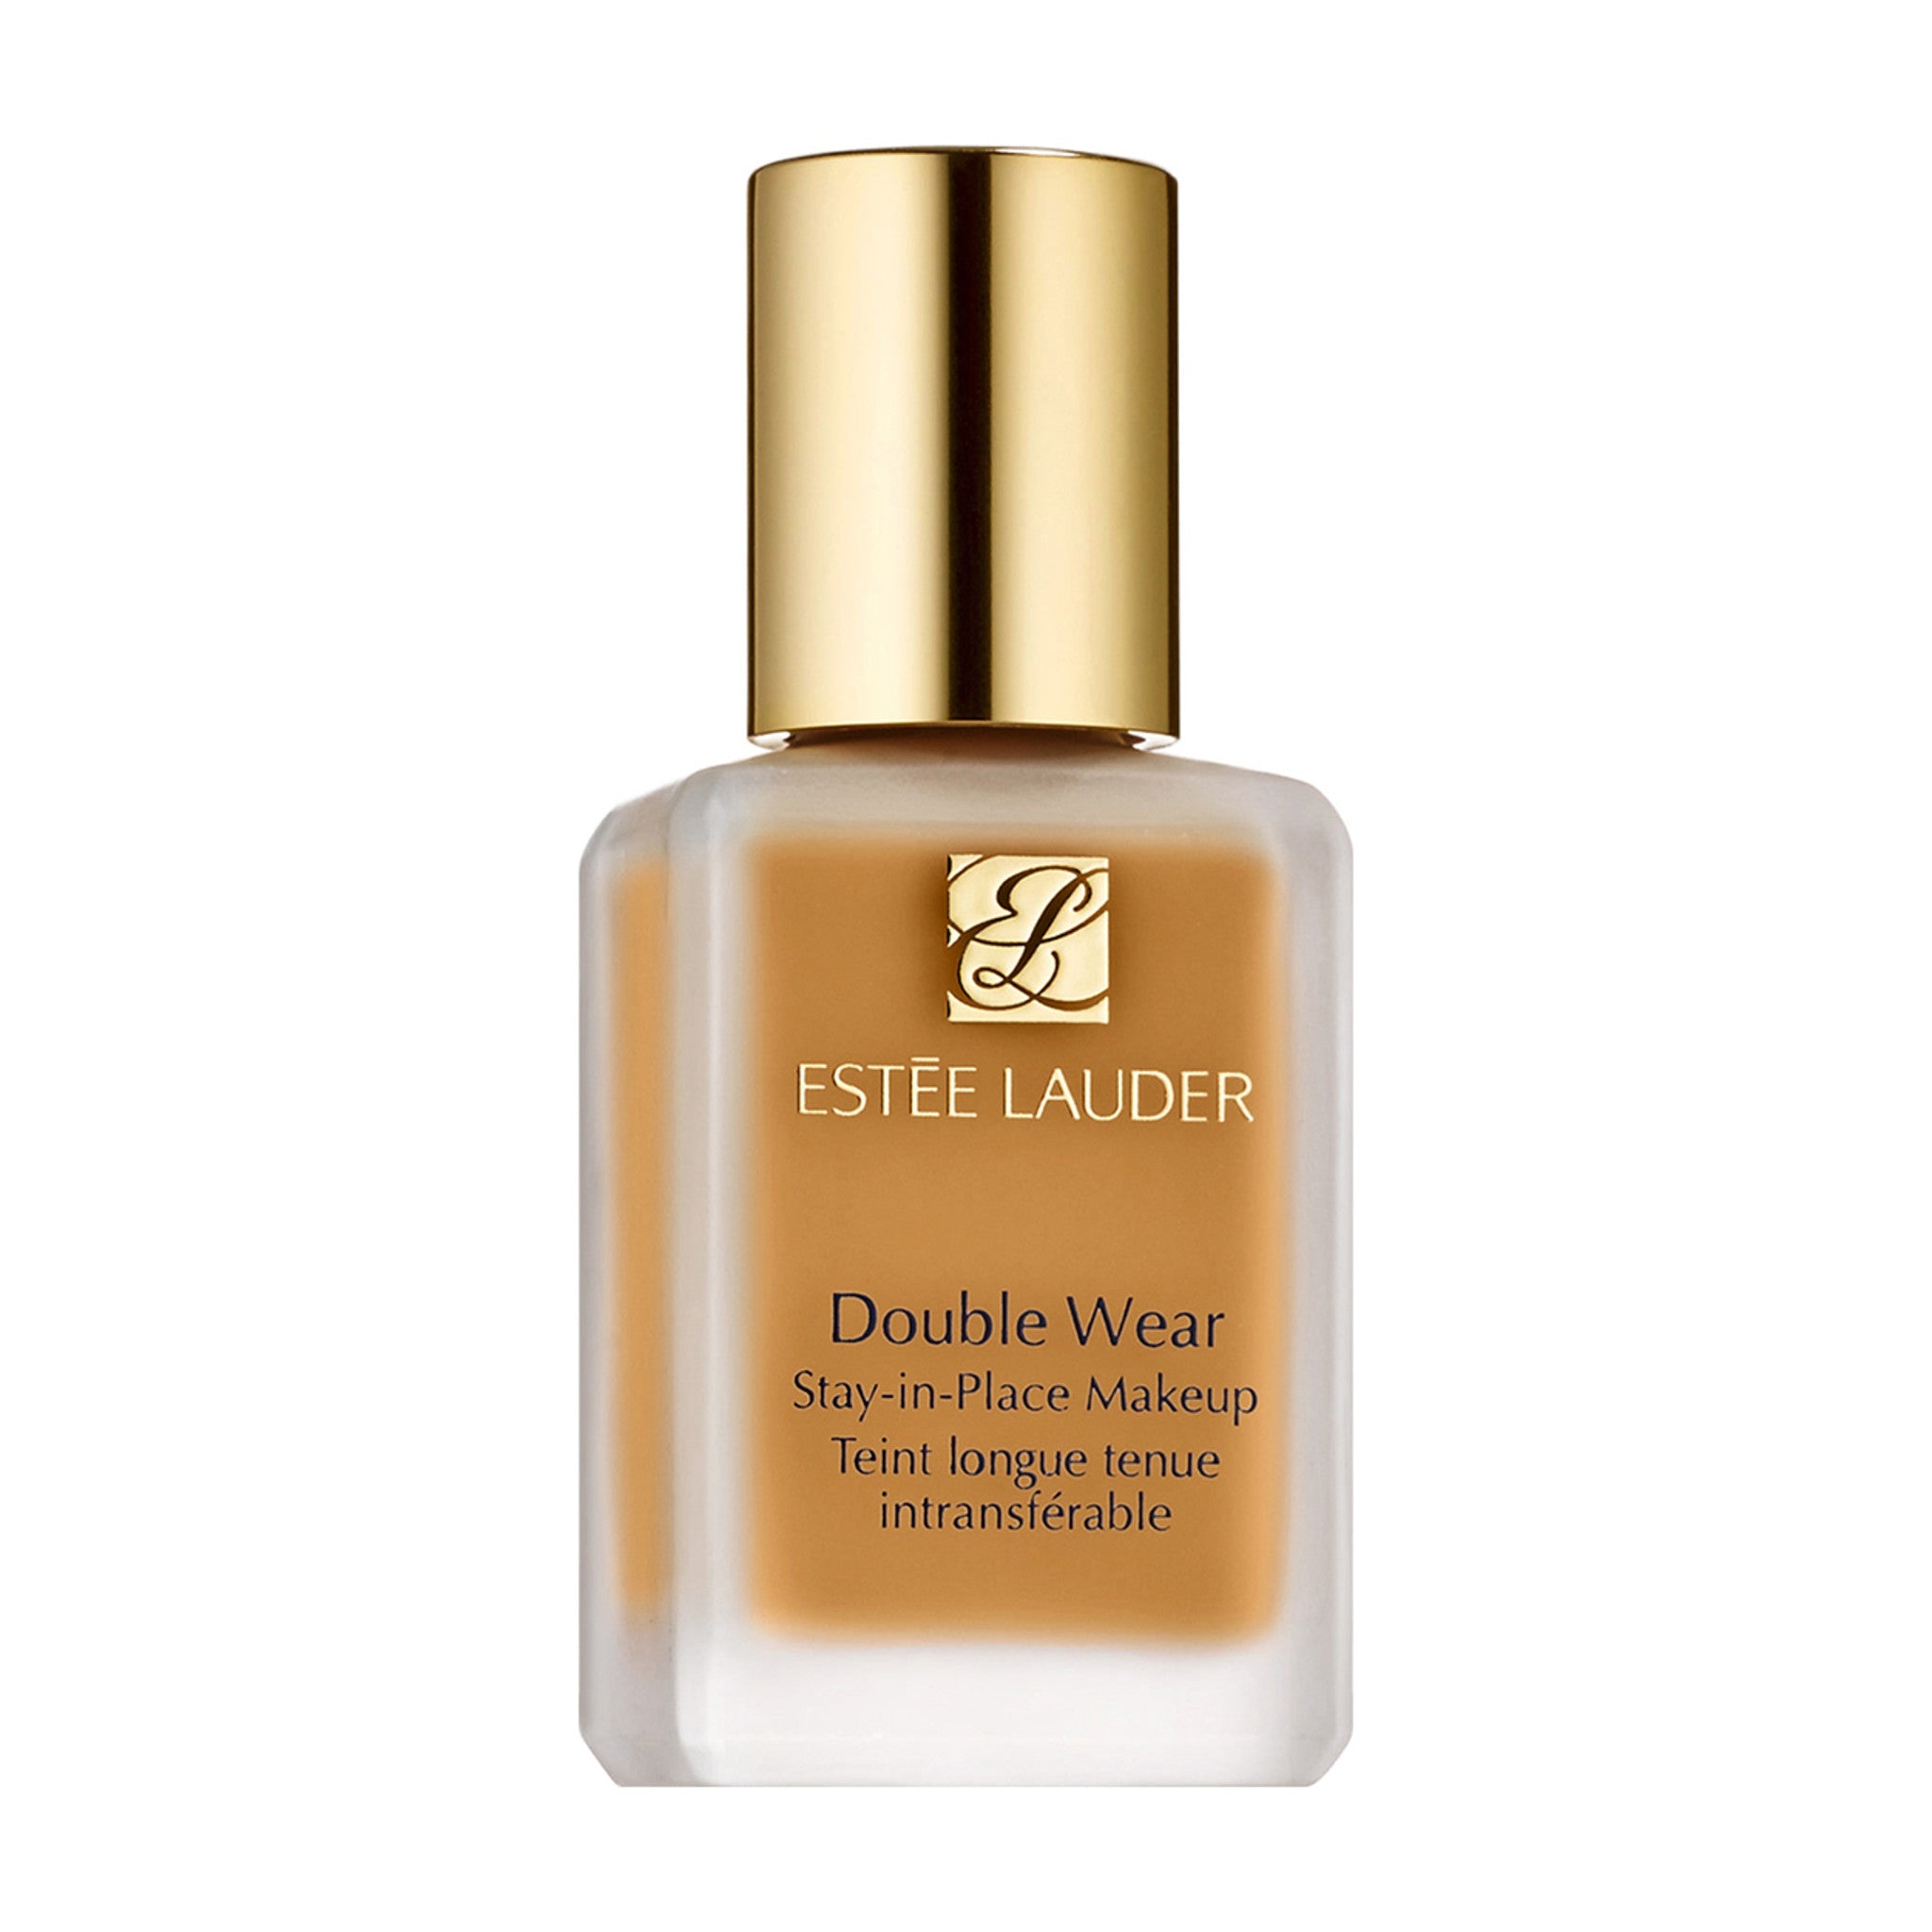 Estee Lauder Double Wear Stay-in-Place Makeup, Soft Tan 4C3 - 1 fl oz bottle